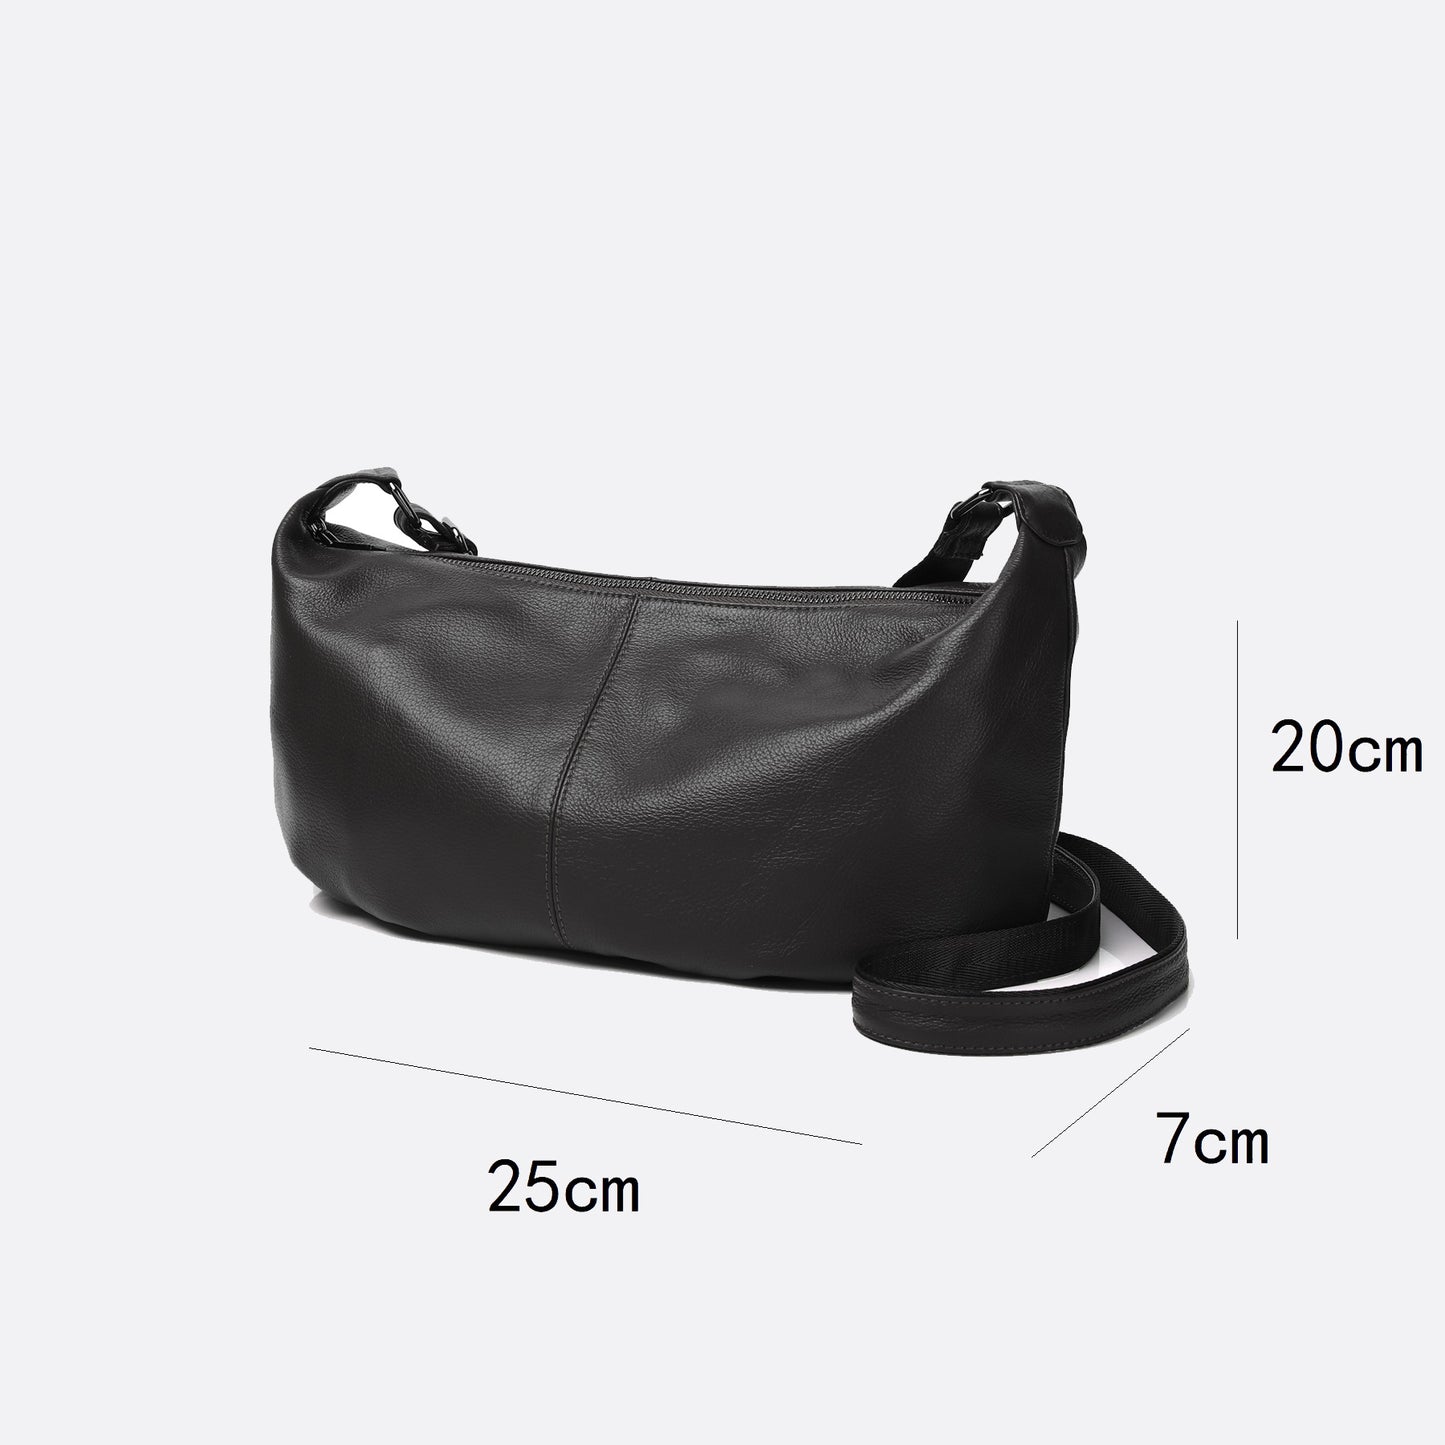 Unisex Women's and Men's genuine cowhide leather handbag Poches V3 design